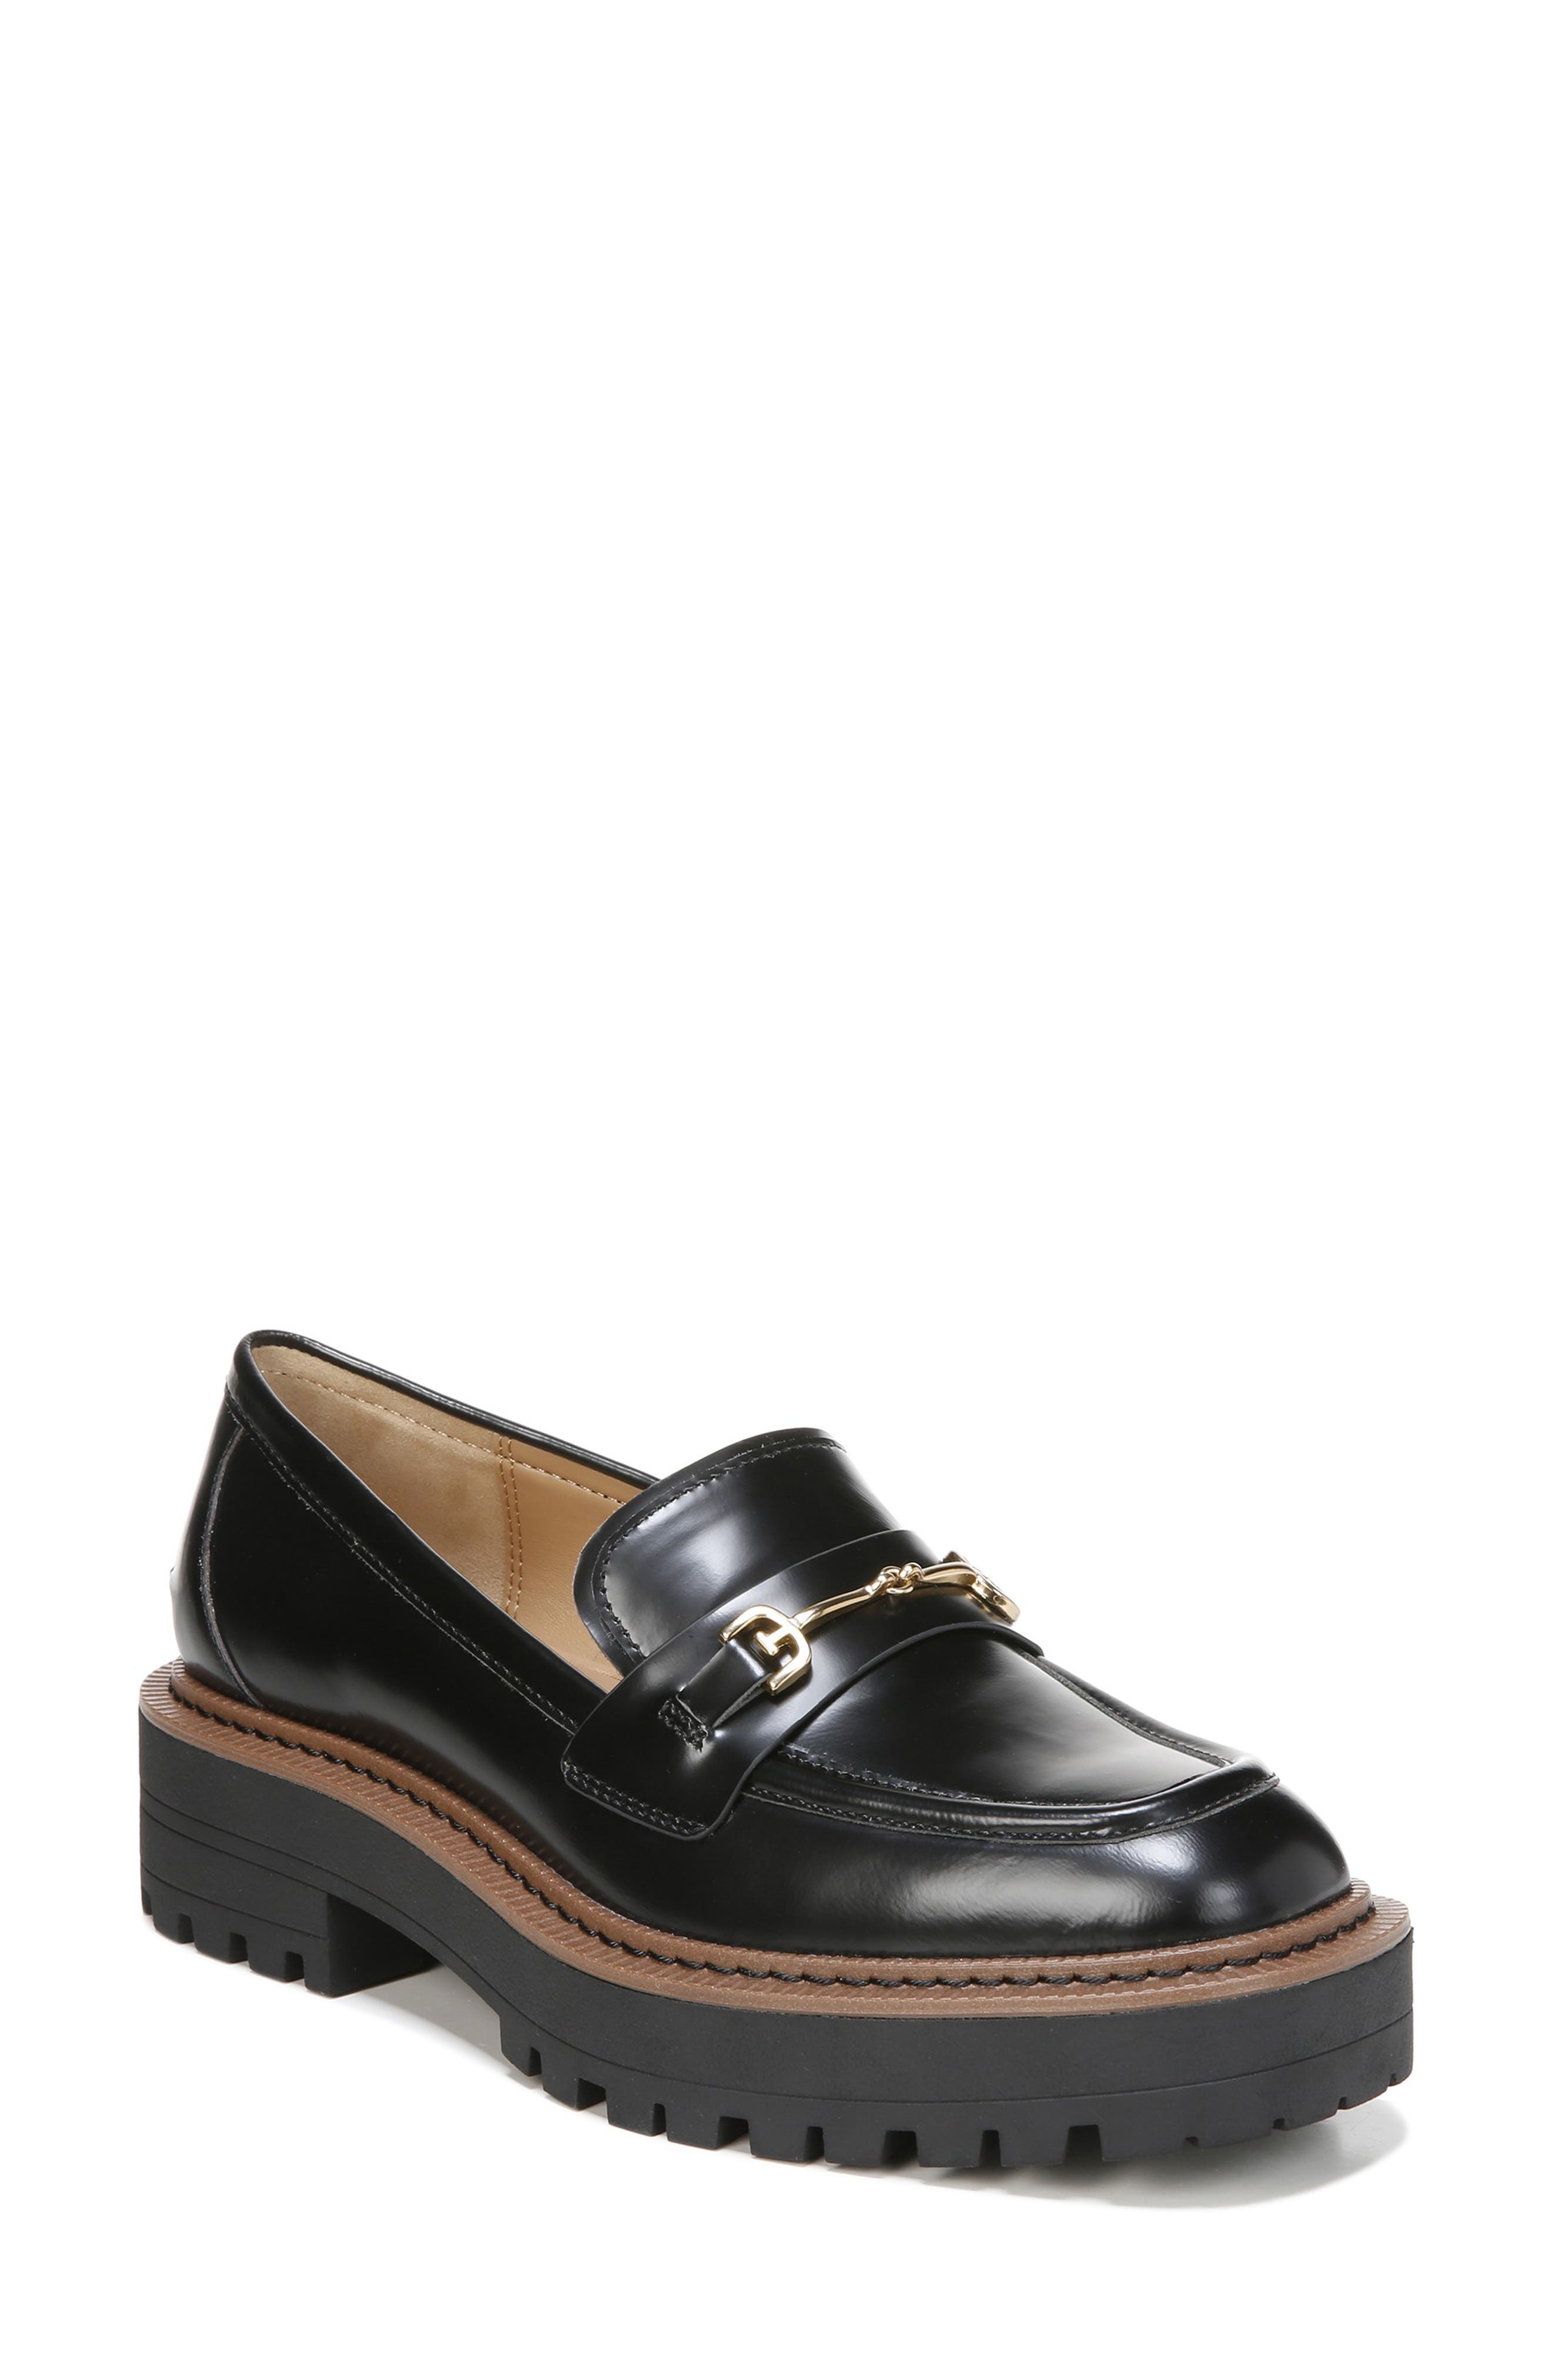 Women cute tassel loafers patent leather platform slip on casual flat heel shoes 